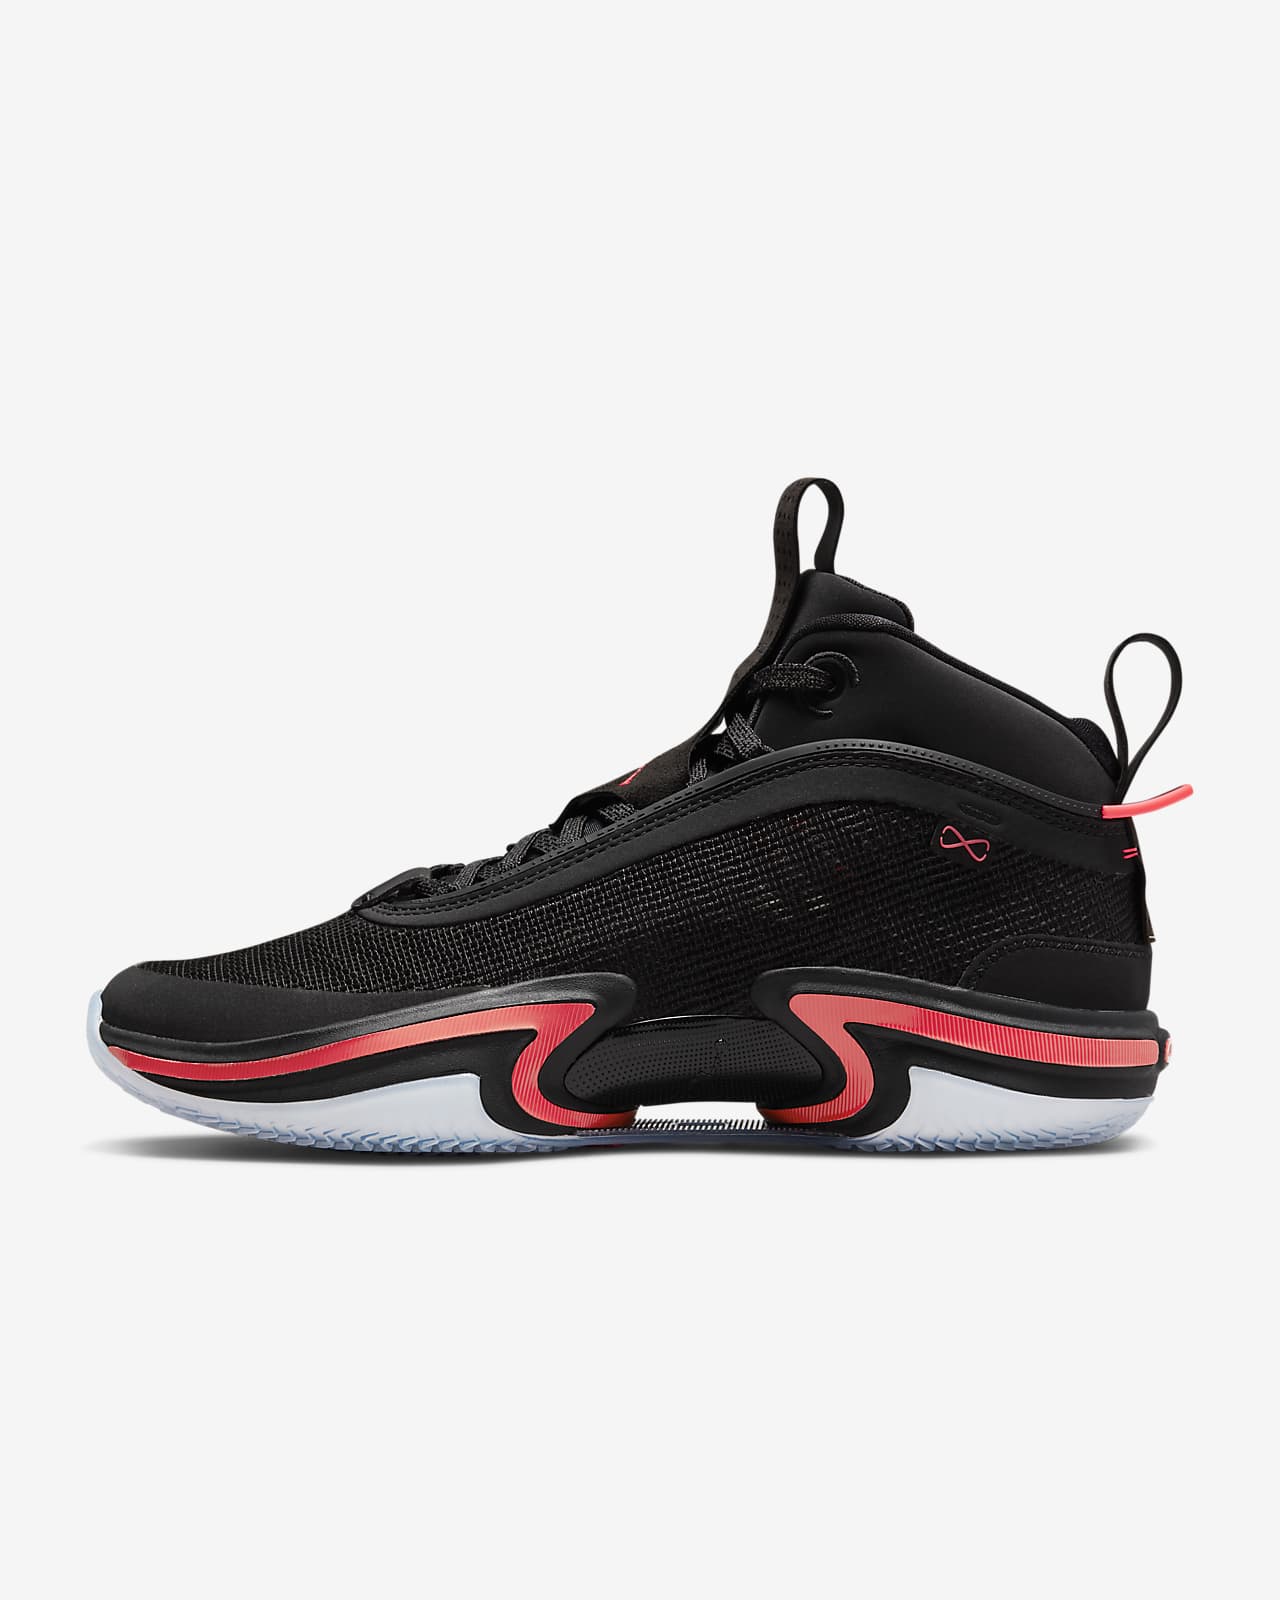 Air Jordan XXXVI Basketball Shoes